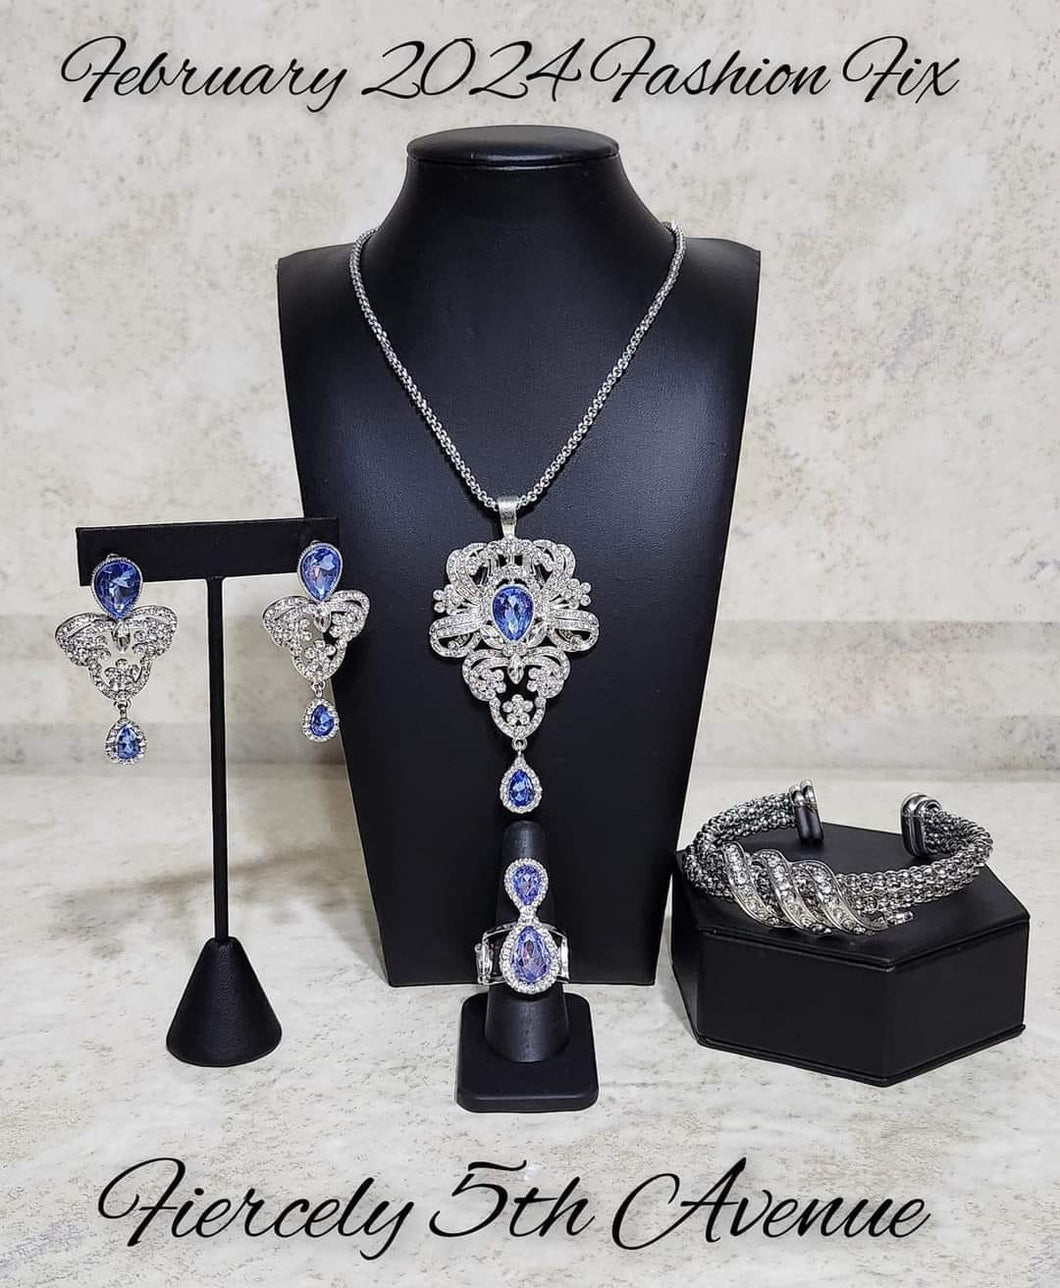 Fiercely 5th Avenue - Fashion Fix Set - February 2024 - Dare2bdazzlin N Jewelry